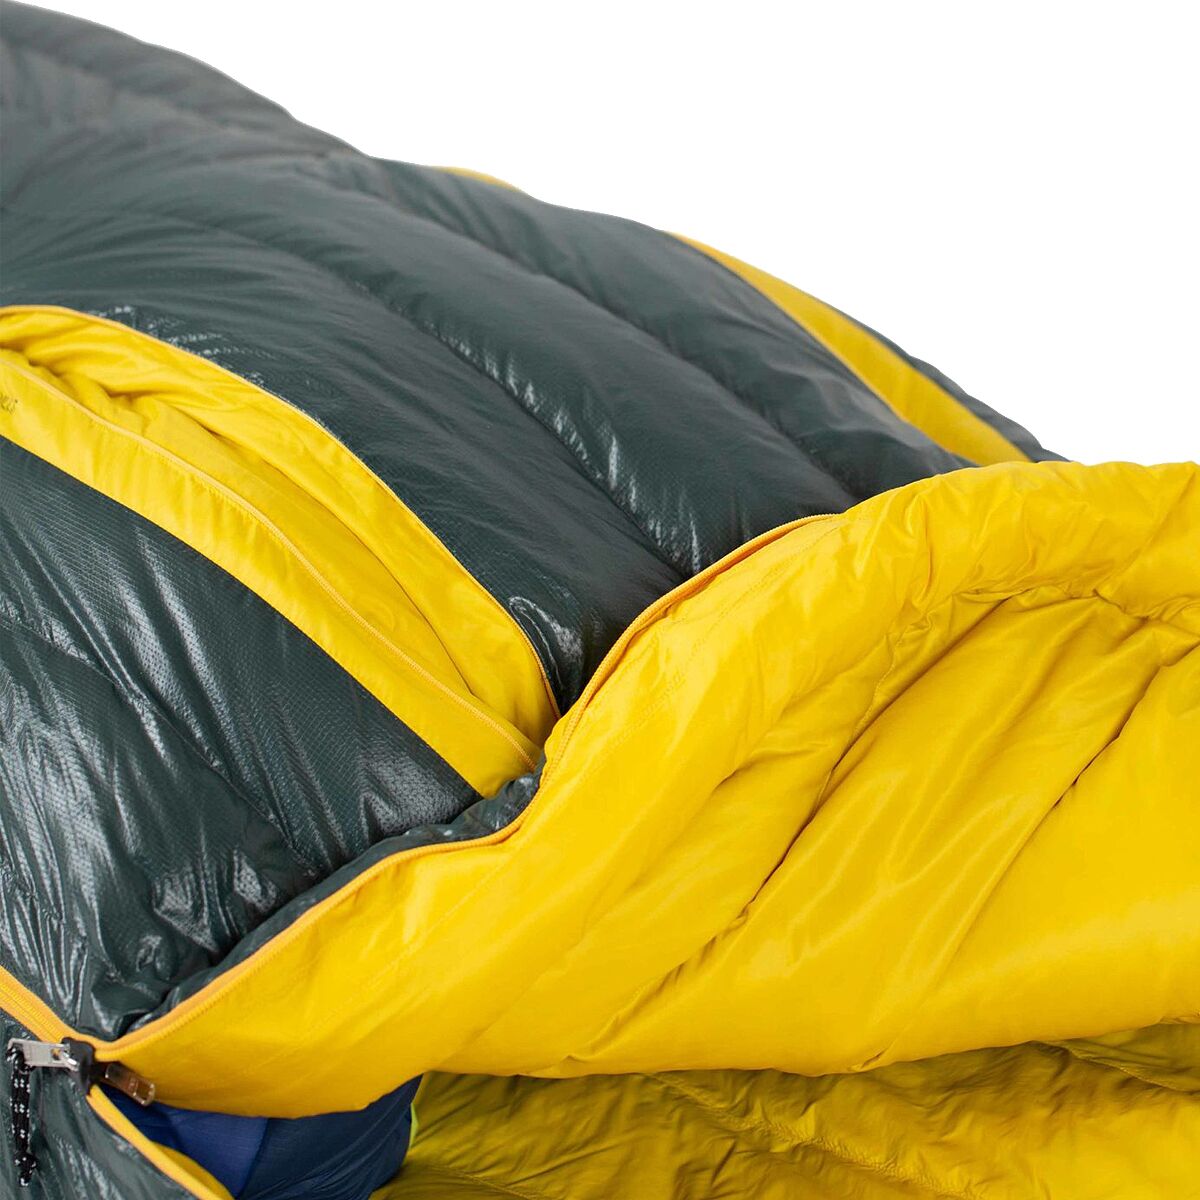  NEMO Equipment Inc. Riff 30 Sleeping Bag: 30F Down - Hike & Camp